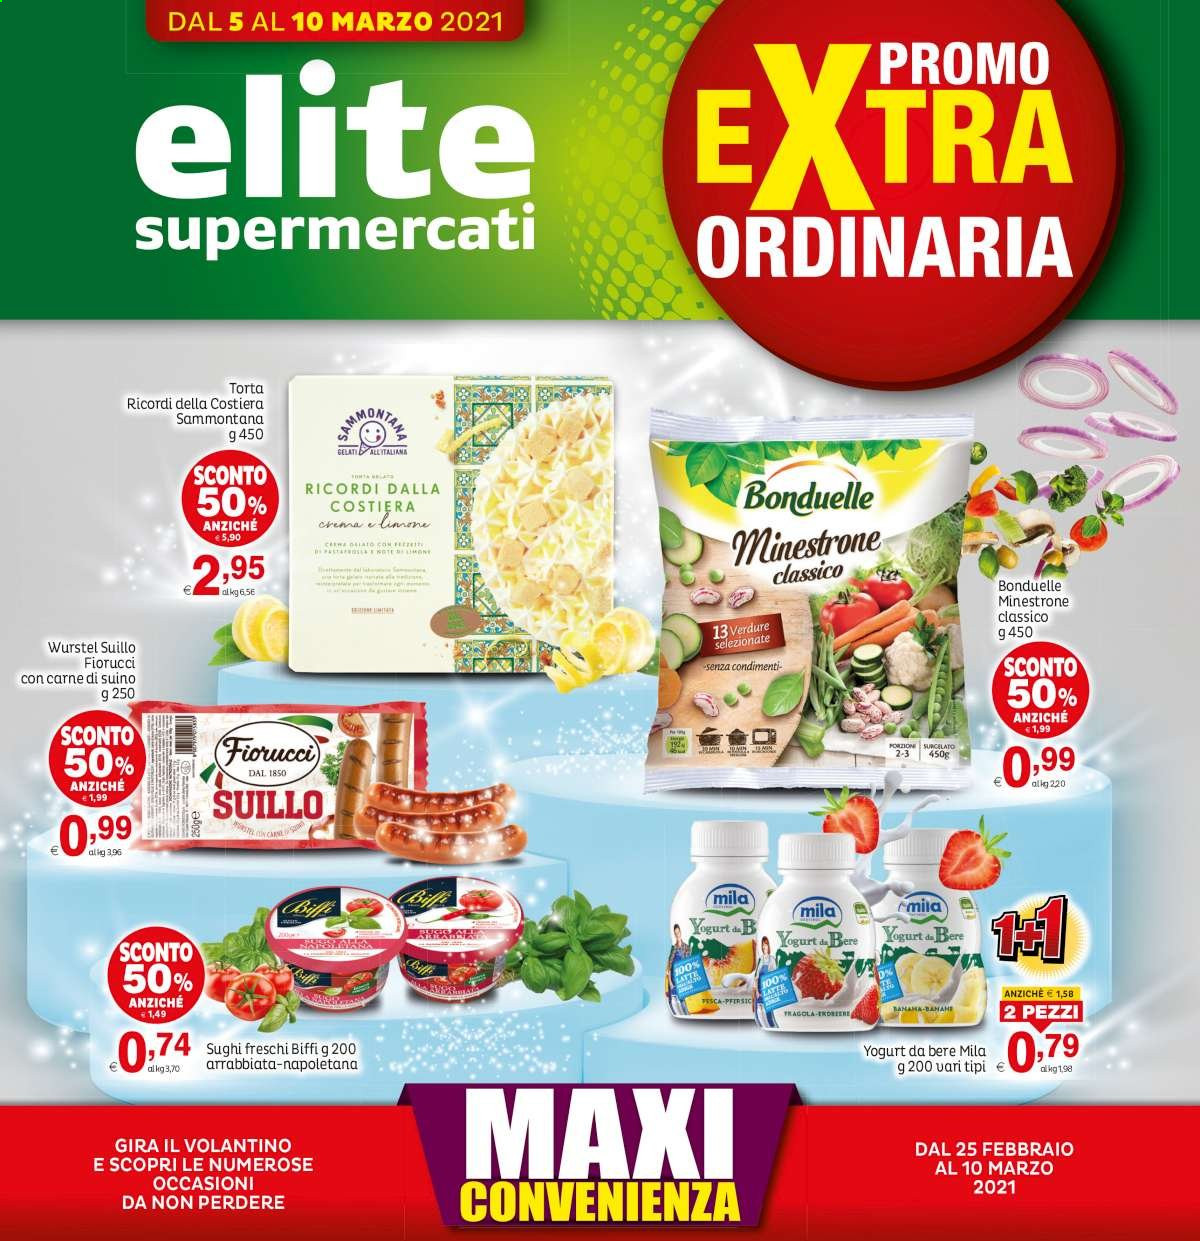 thumbnail - Volantino Elite Supermercati - 5/3/2021 - 10/3/2021 - Prodotti in offerta - torta, Bonduelle, suino, minestrone, sugo, Fiorucci, würstel, yogurt, gelato, Sammontana. Pagina 1.